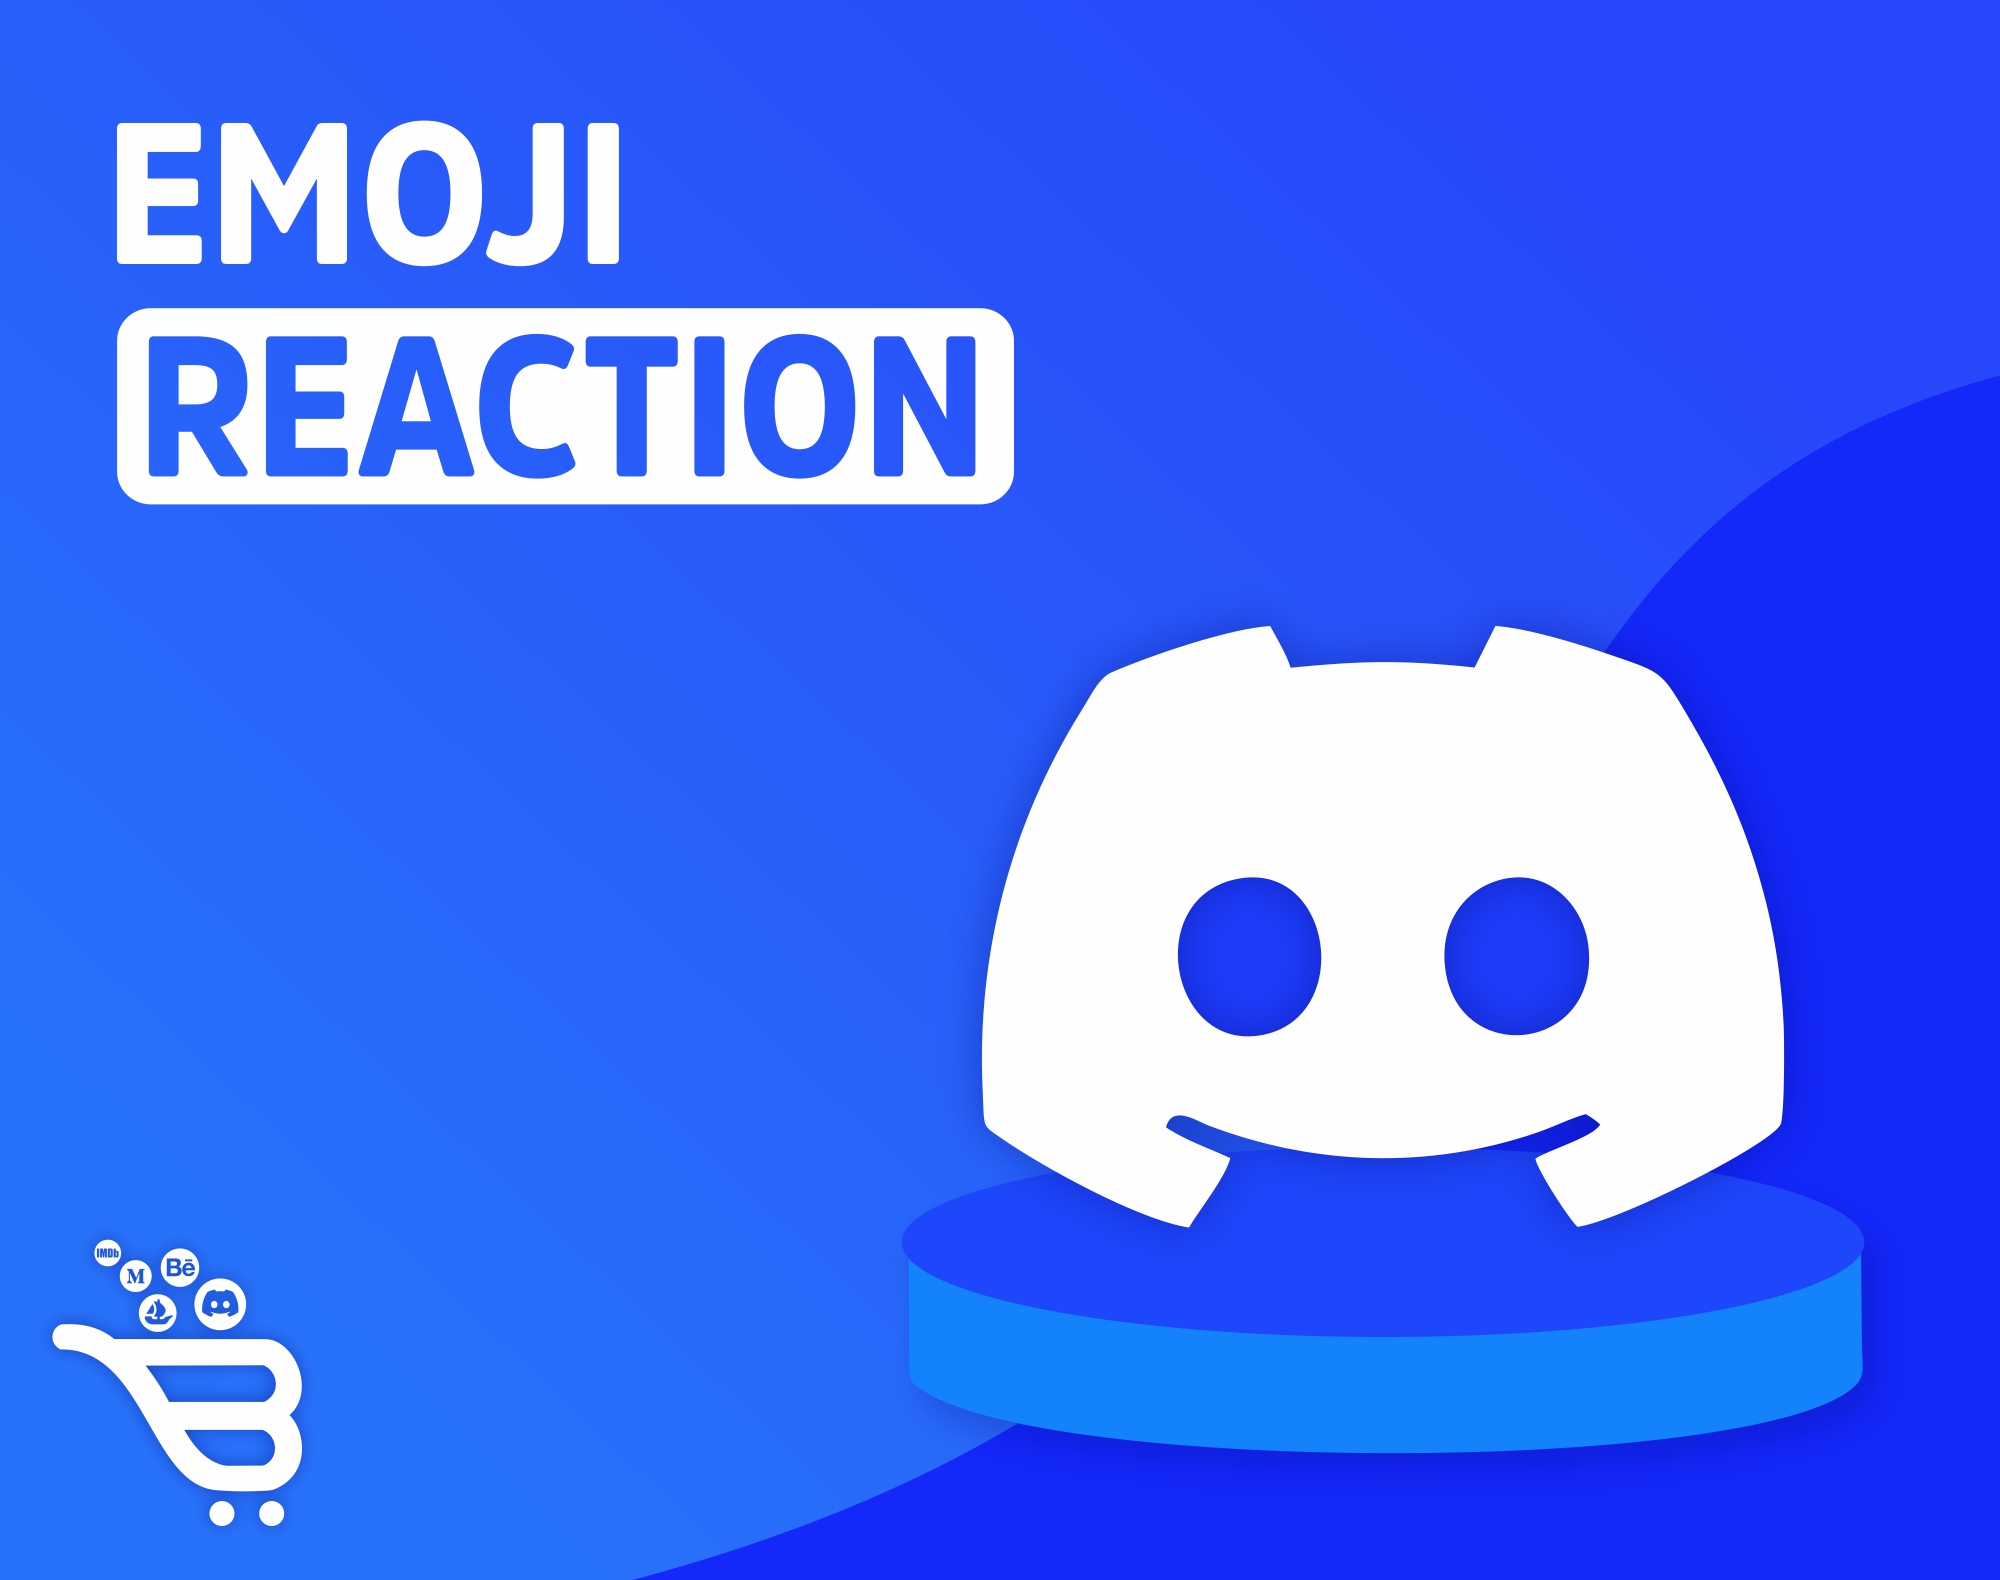 Get 100 Discord Emoji Reactions to Your Post (Announcement/sneak-peek reactions)